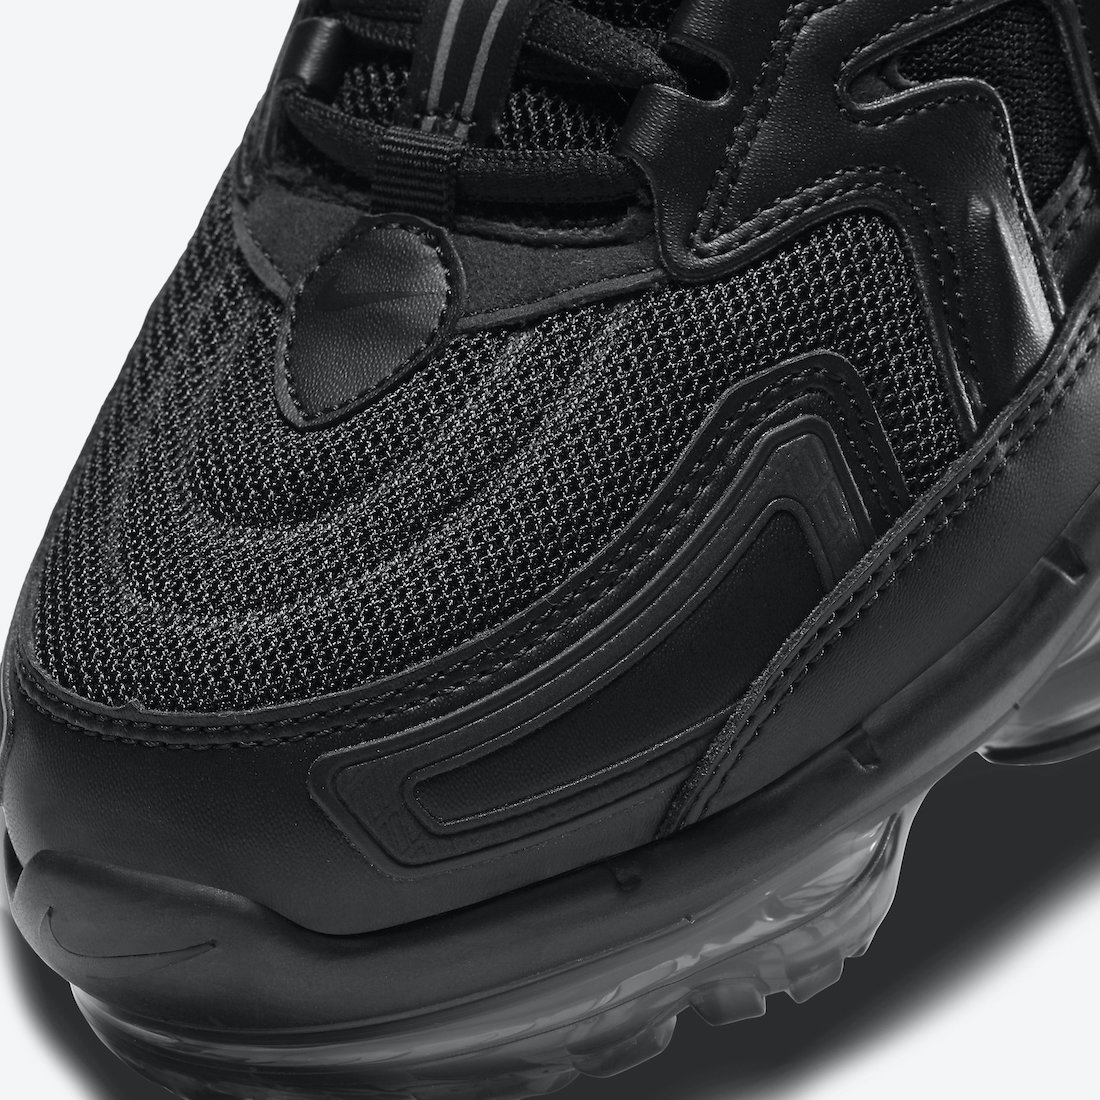 Nike Air VaporMax EVO Black CT2868-003 Release Date Info